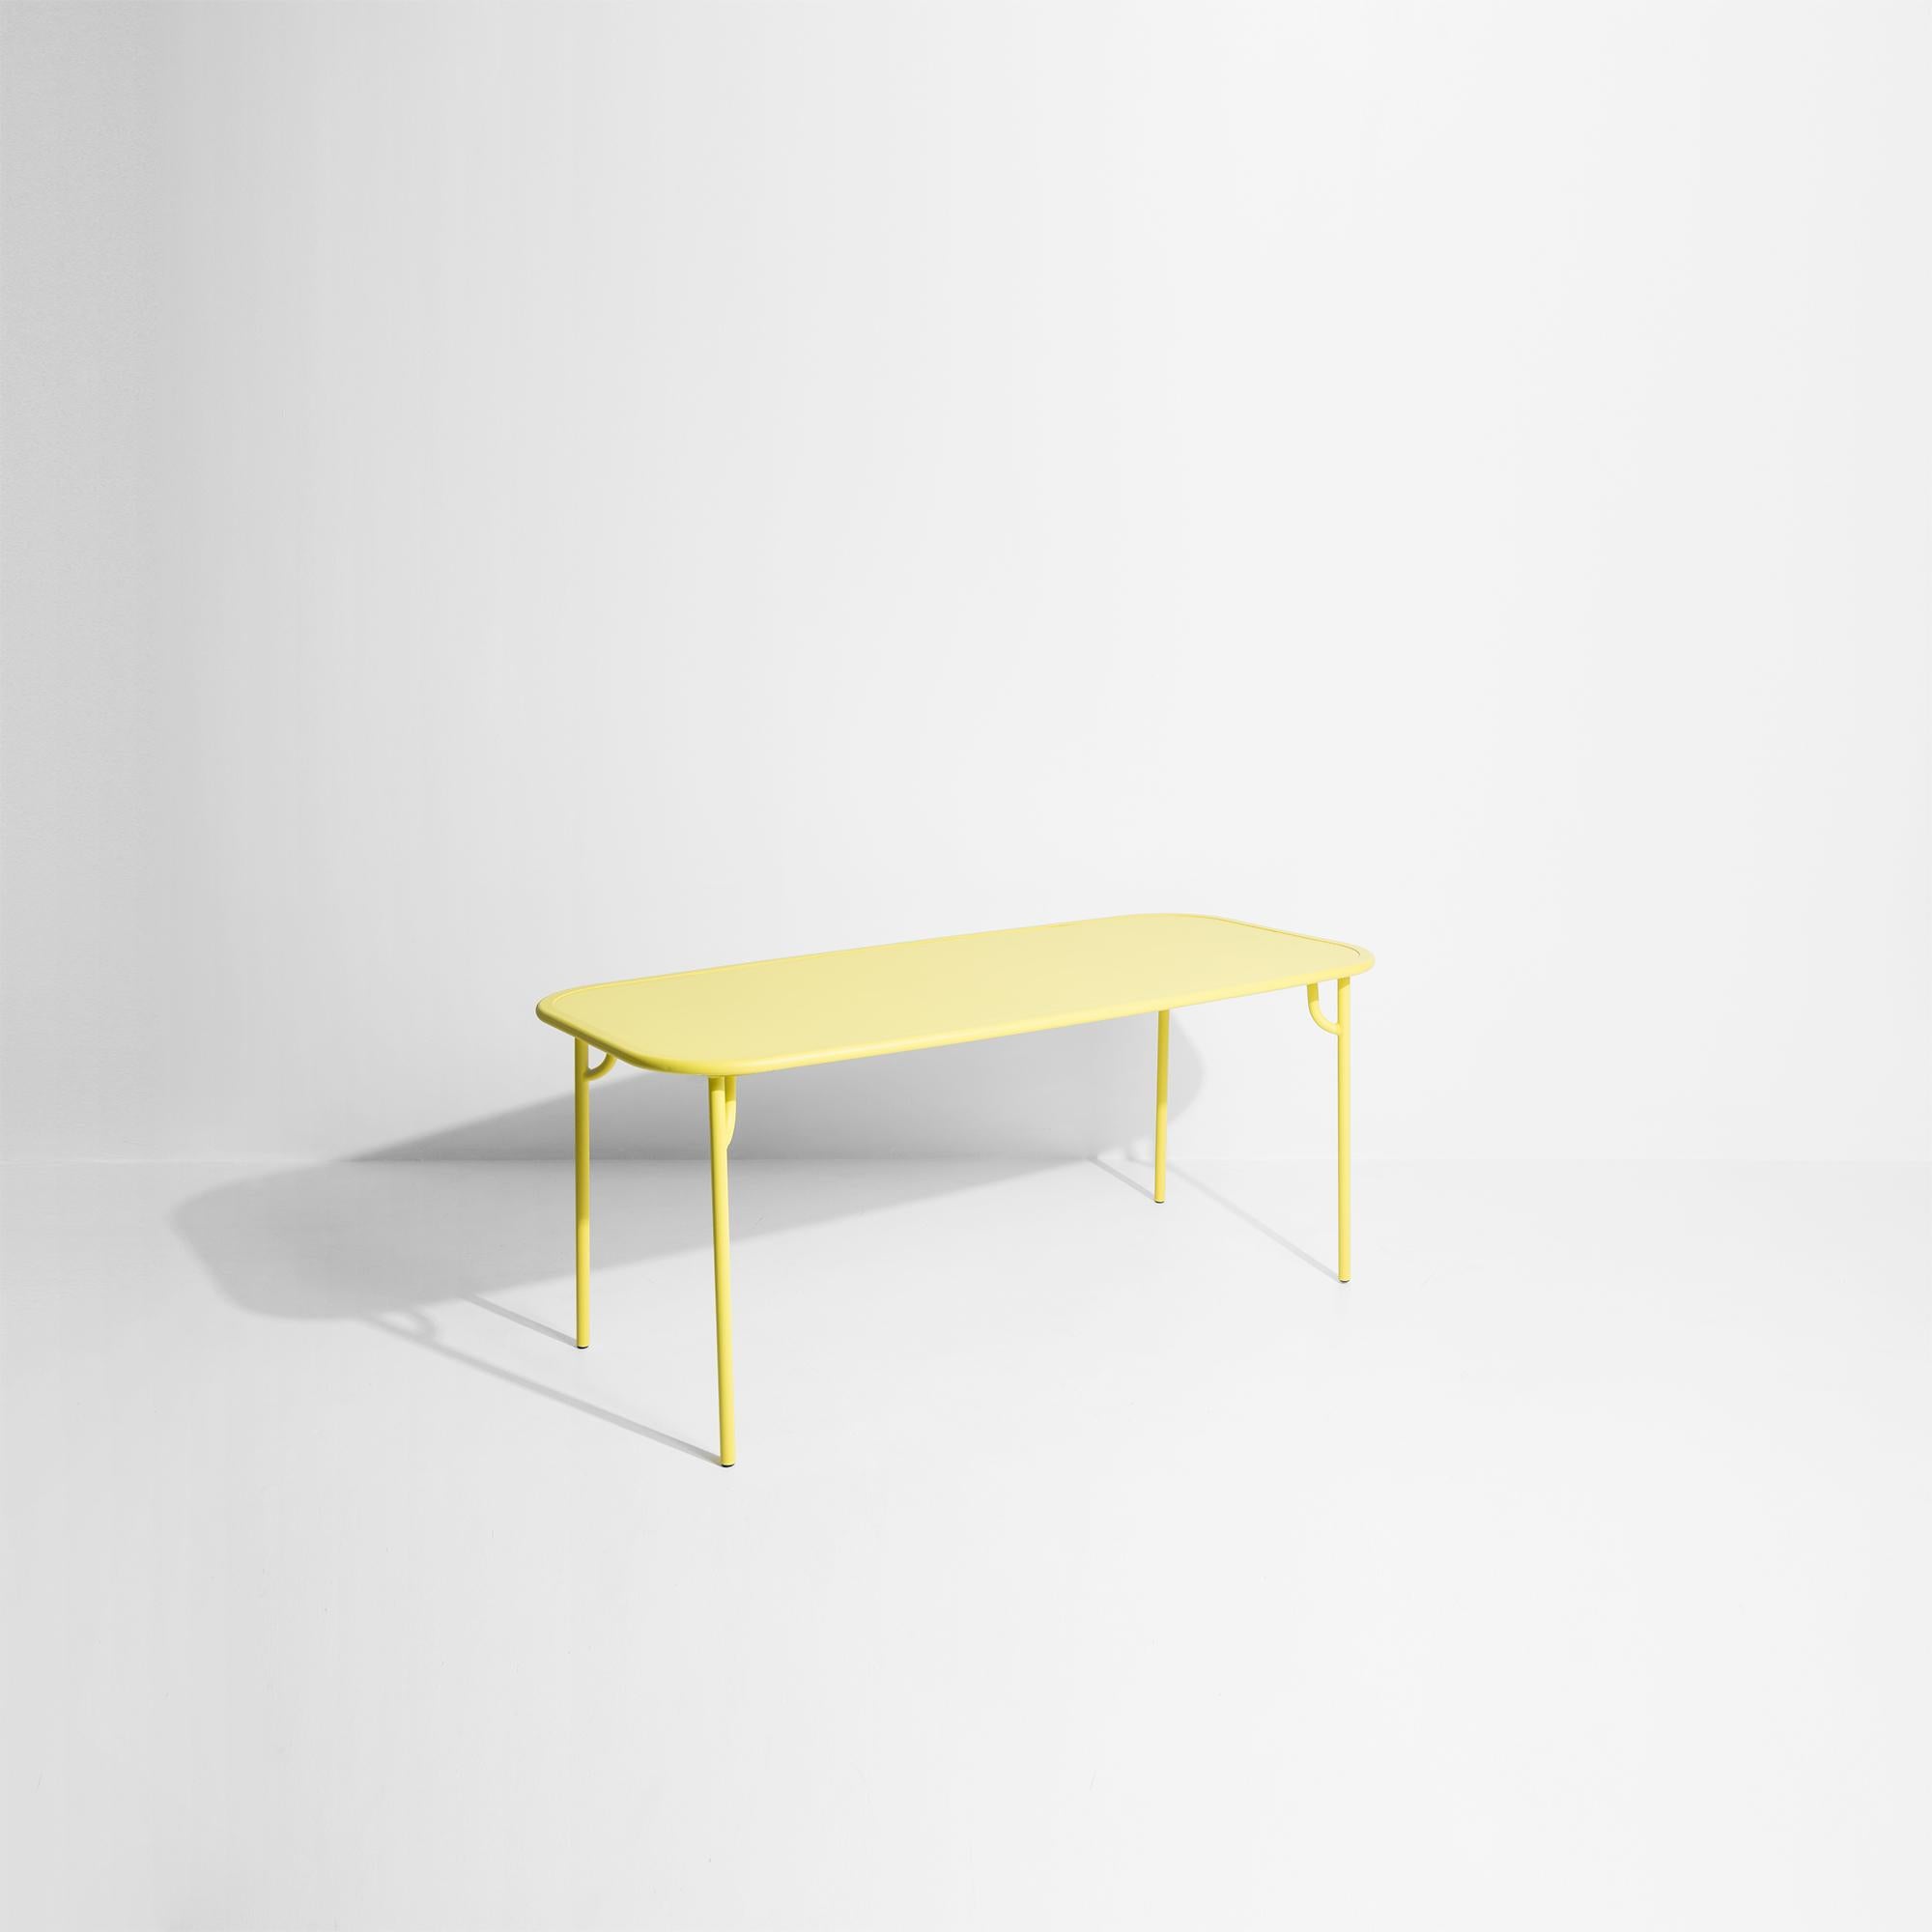 Aluminum Petite Friture Week-End Medium Plain Rectangular Dining Table in Yellow, 2017 For Sale